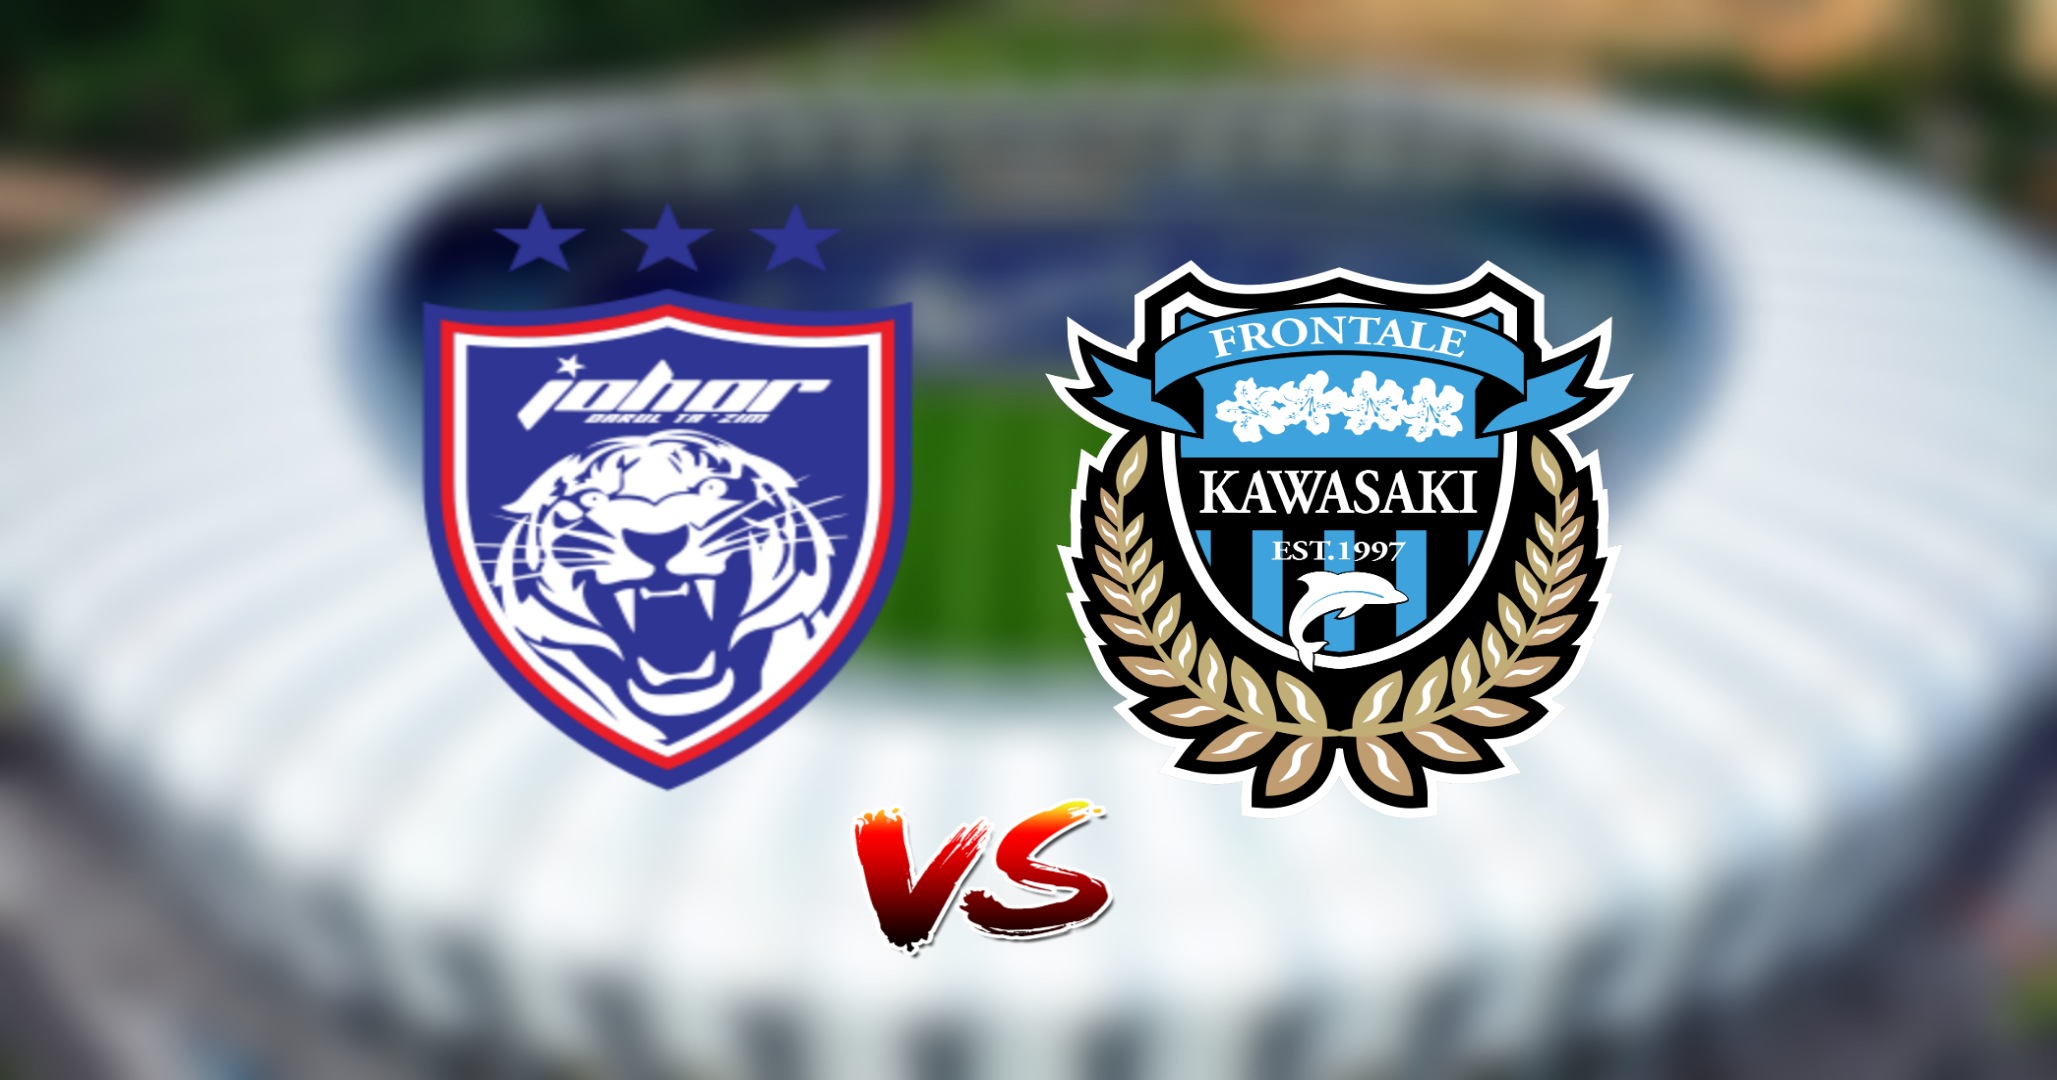 Video Clip Highlights: Johor DT vs Kawasaki Frontale– C1 CHÂU Á